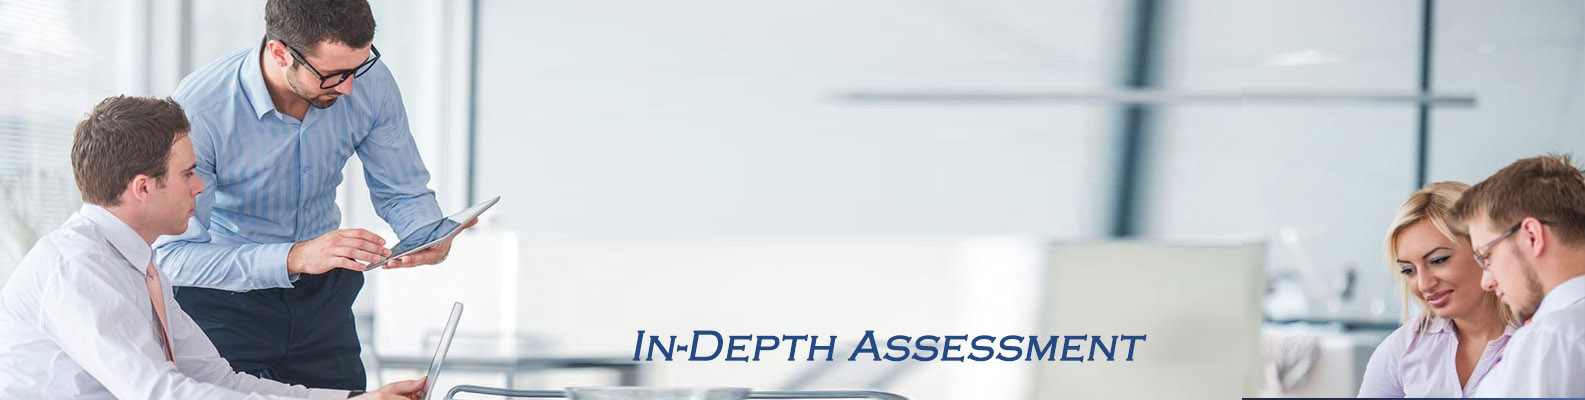 In-Depth-Assessment | Reckon Solutions